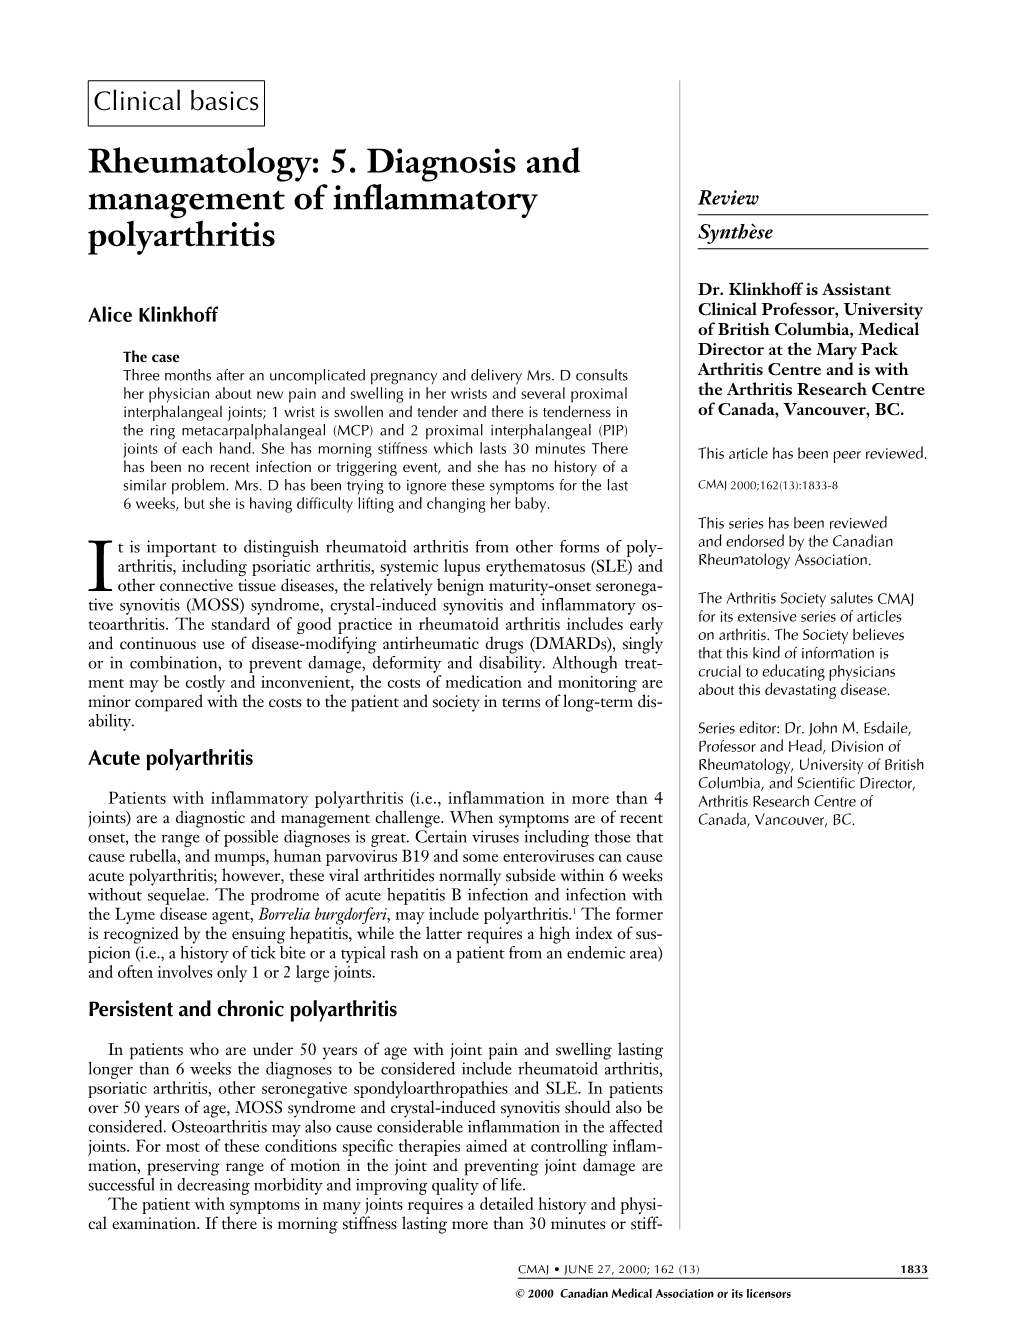 Rheumatology: 5. Diagnosis and Management of Inflammatory Polyarthritis